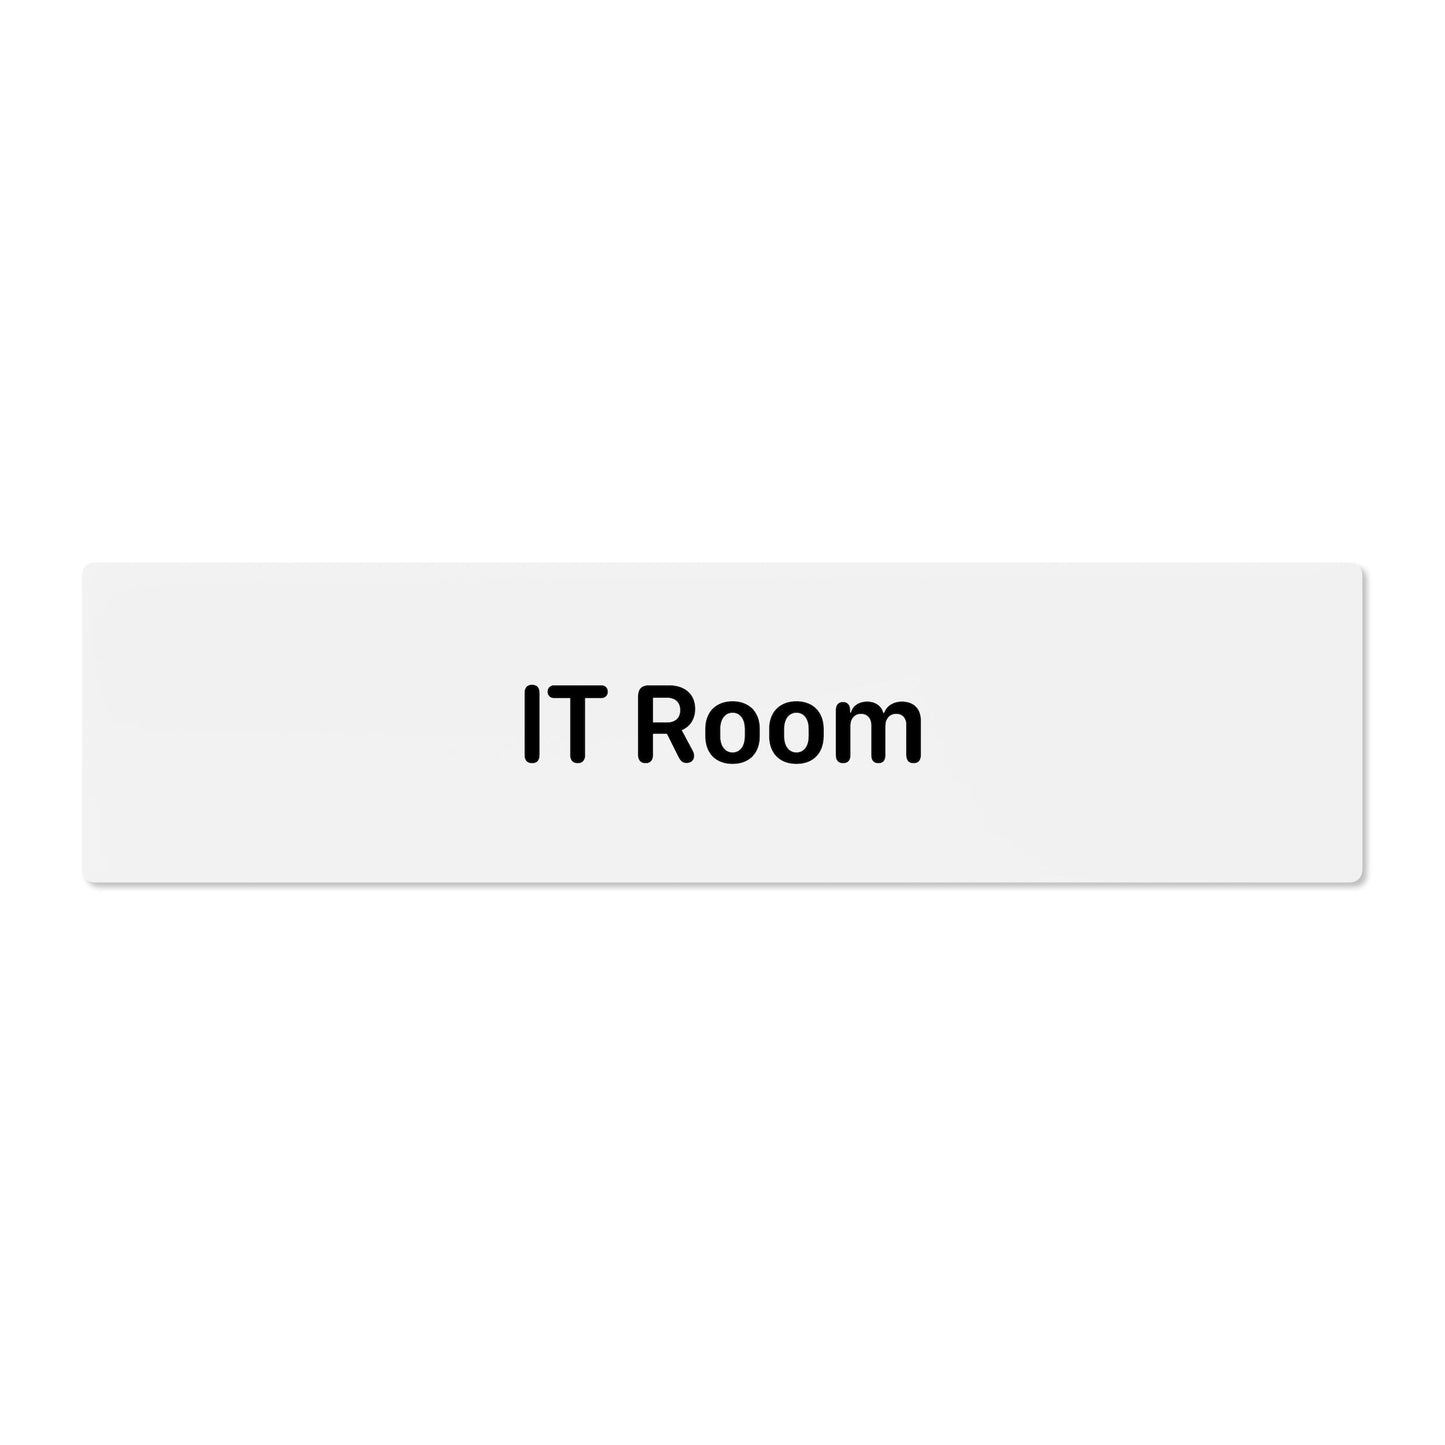 IT Room